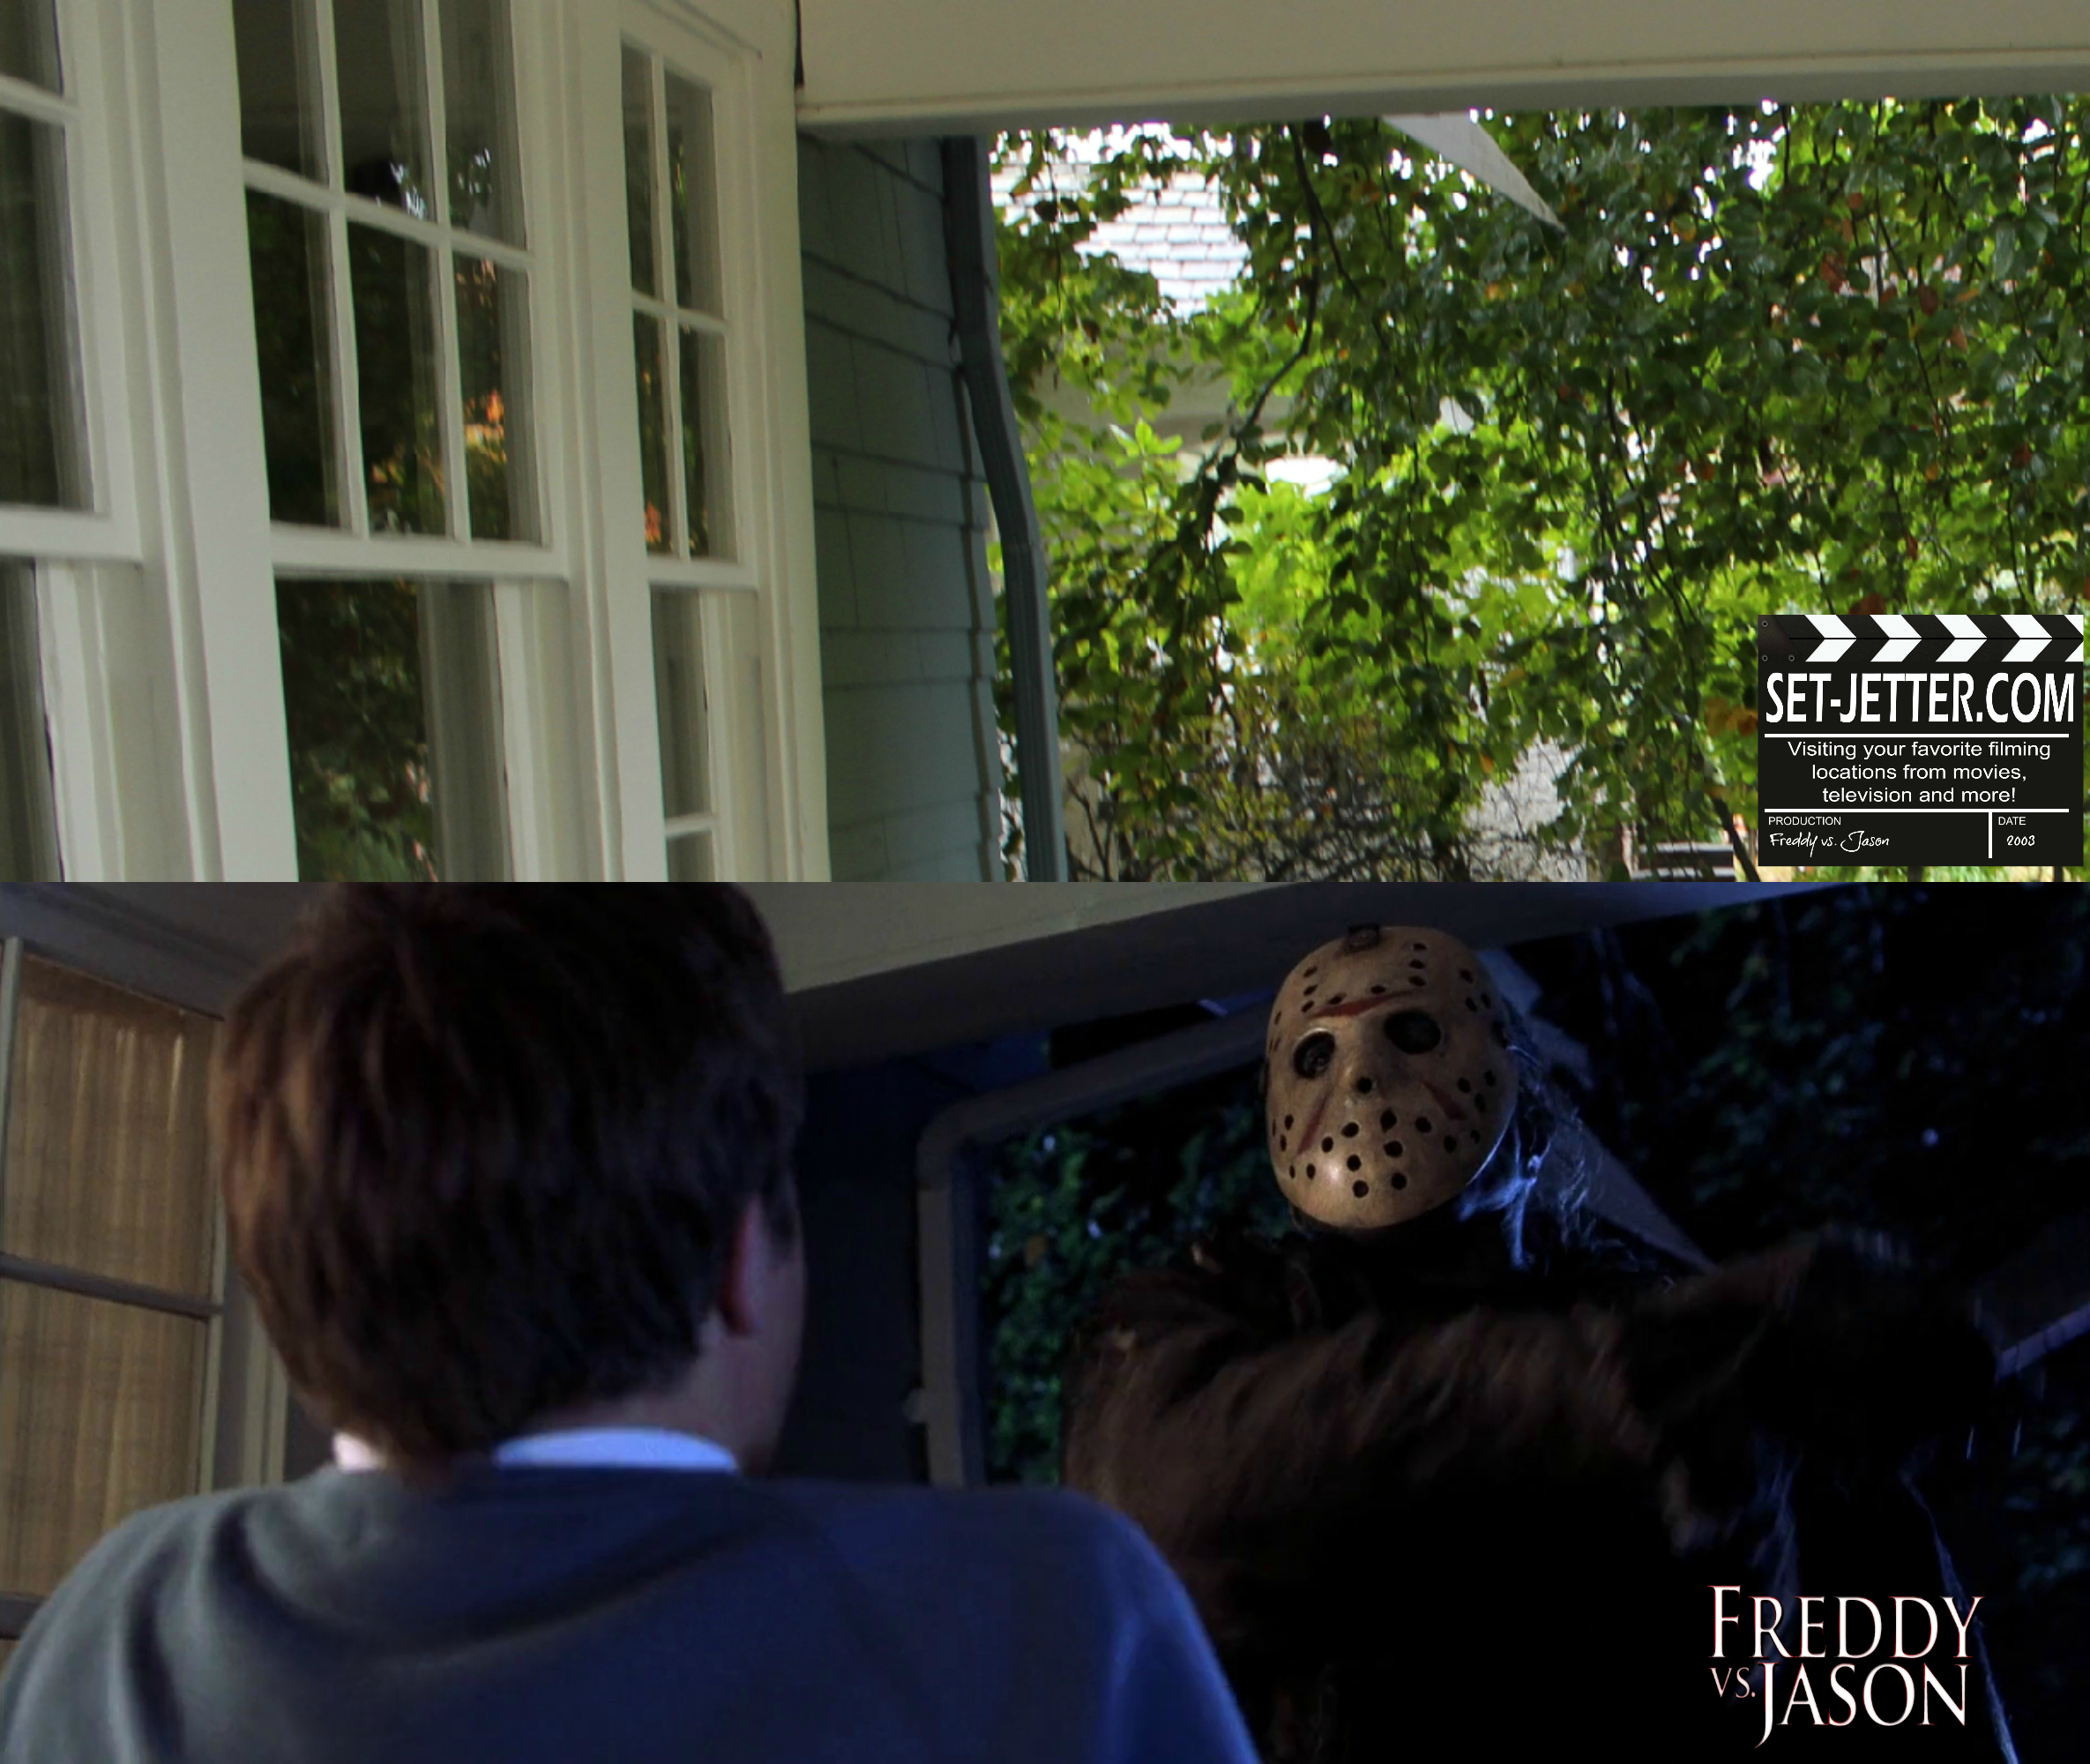 Freddy vs Jason comparison 31.jpg